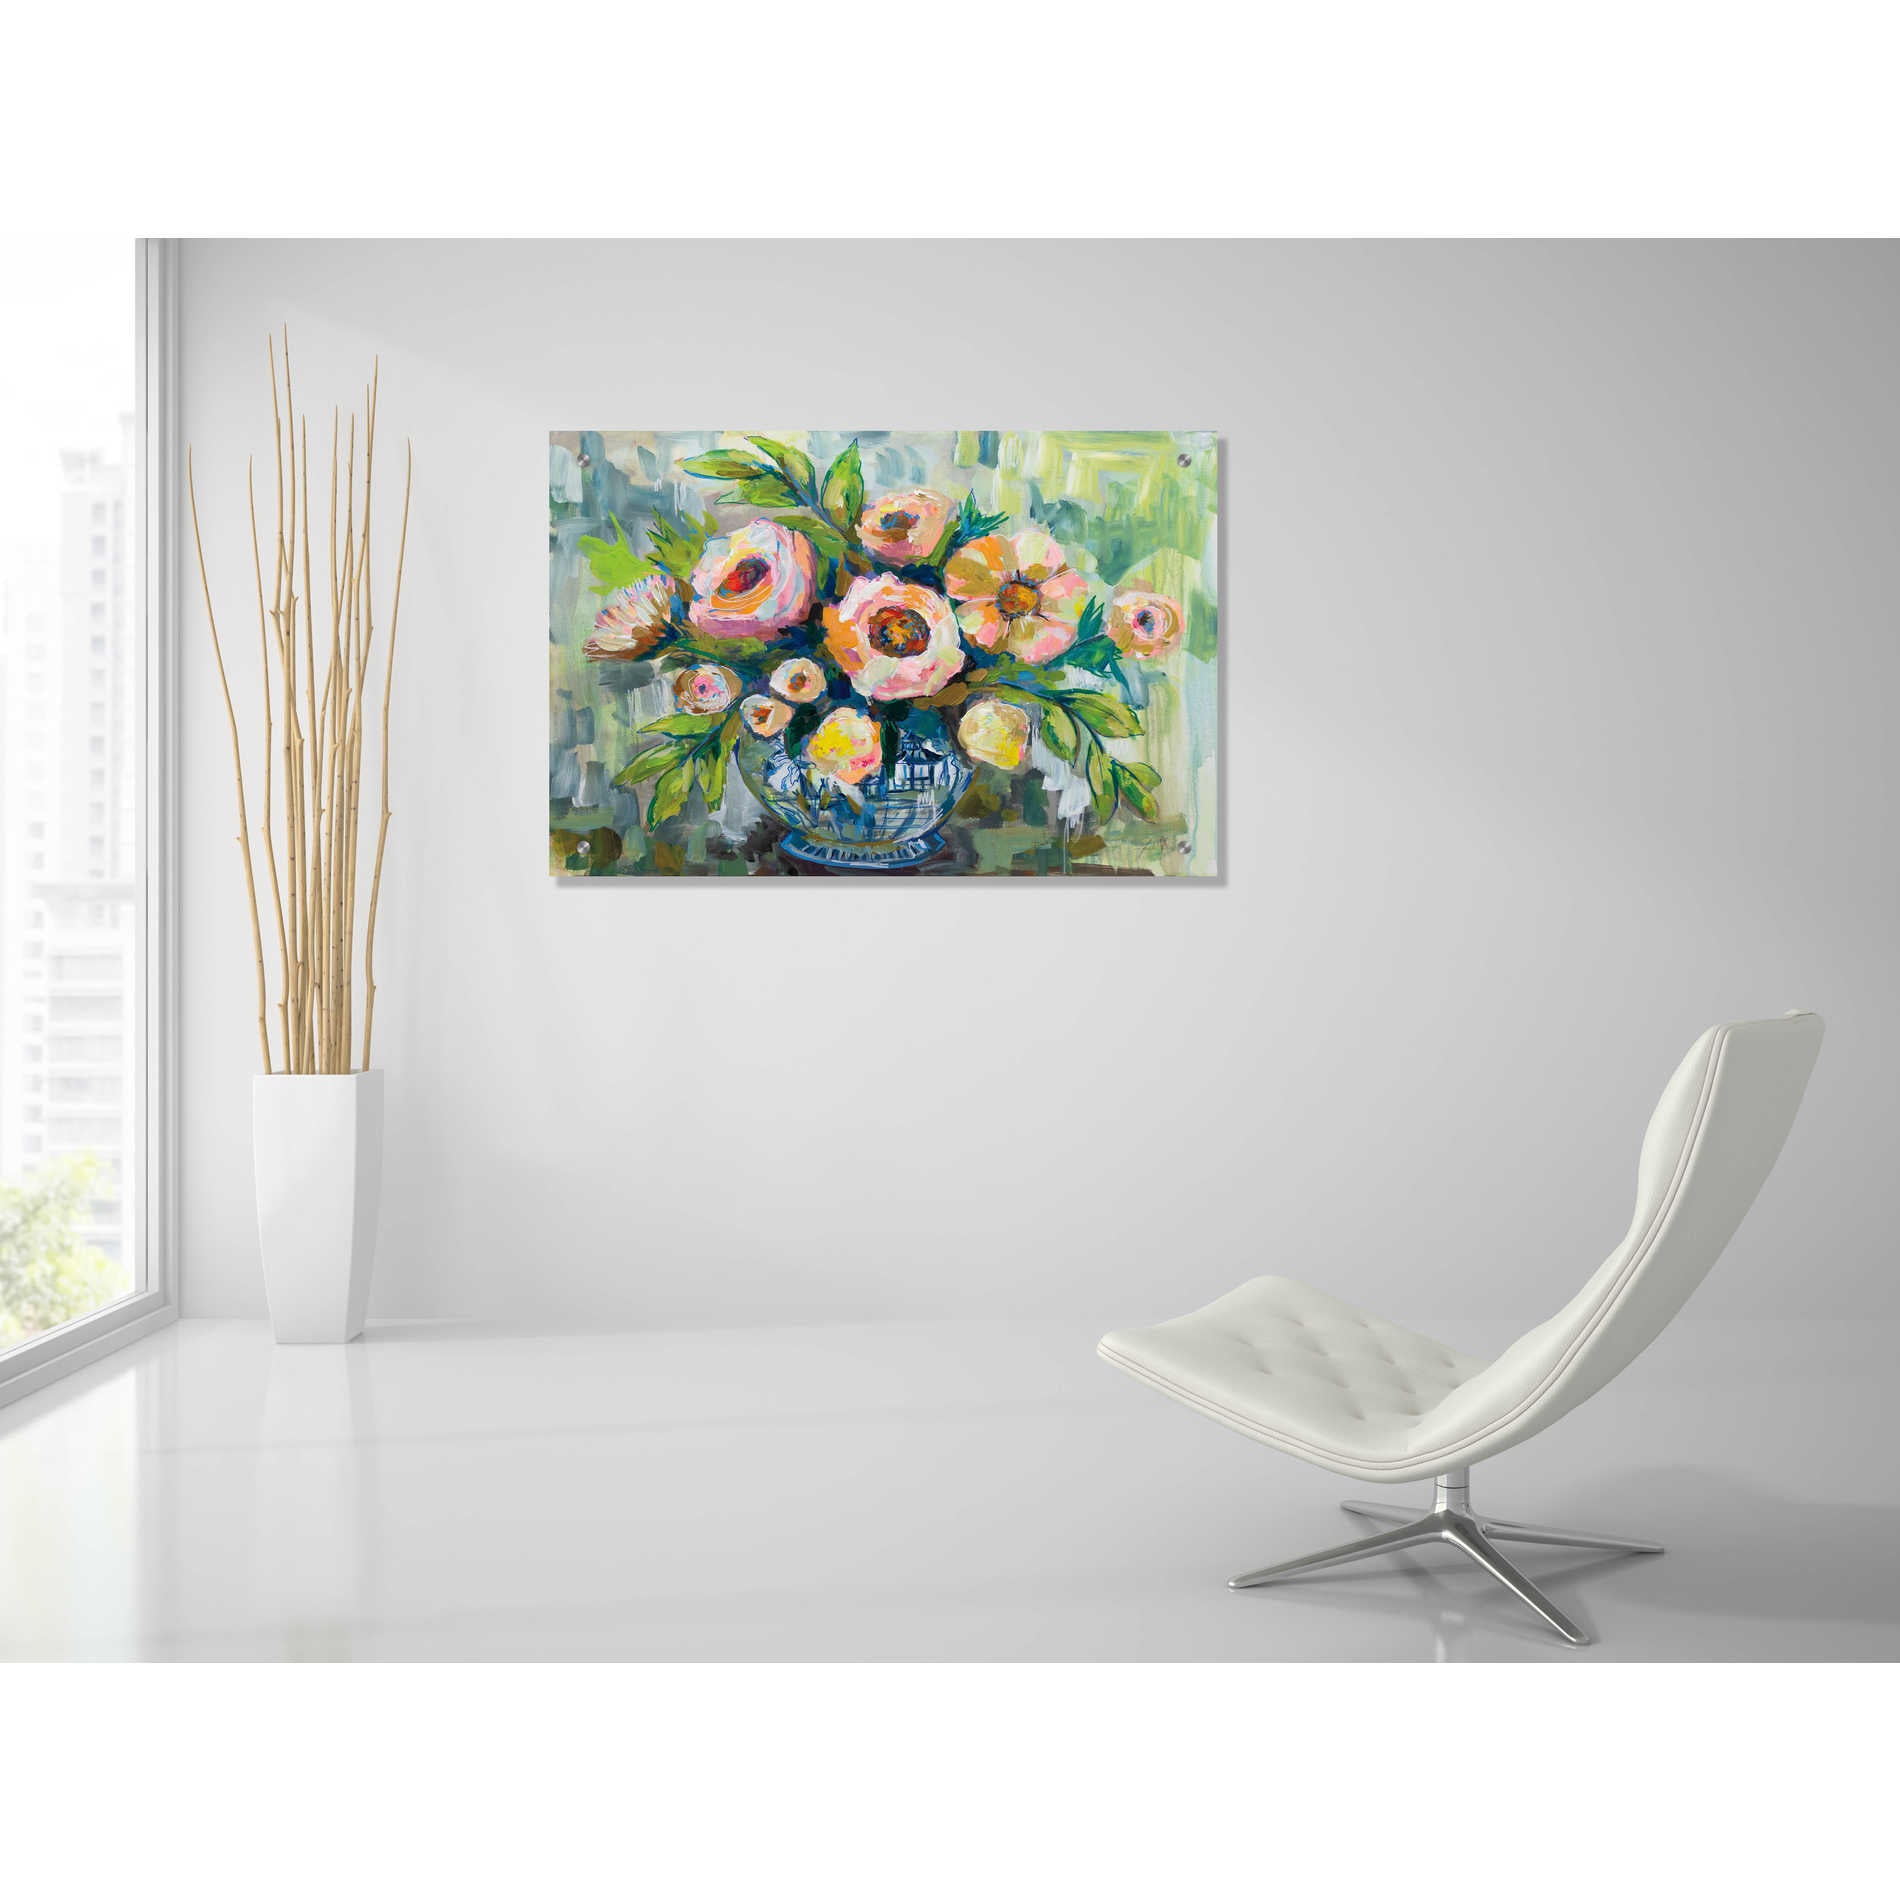 Epic Art 'Midsummer' by Jeanette Vertentes, Acrylic Glass Wall Art,36x24